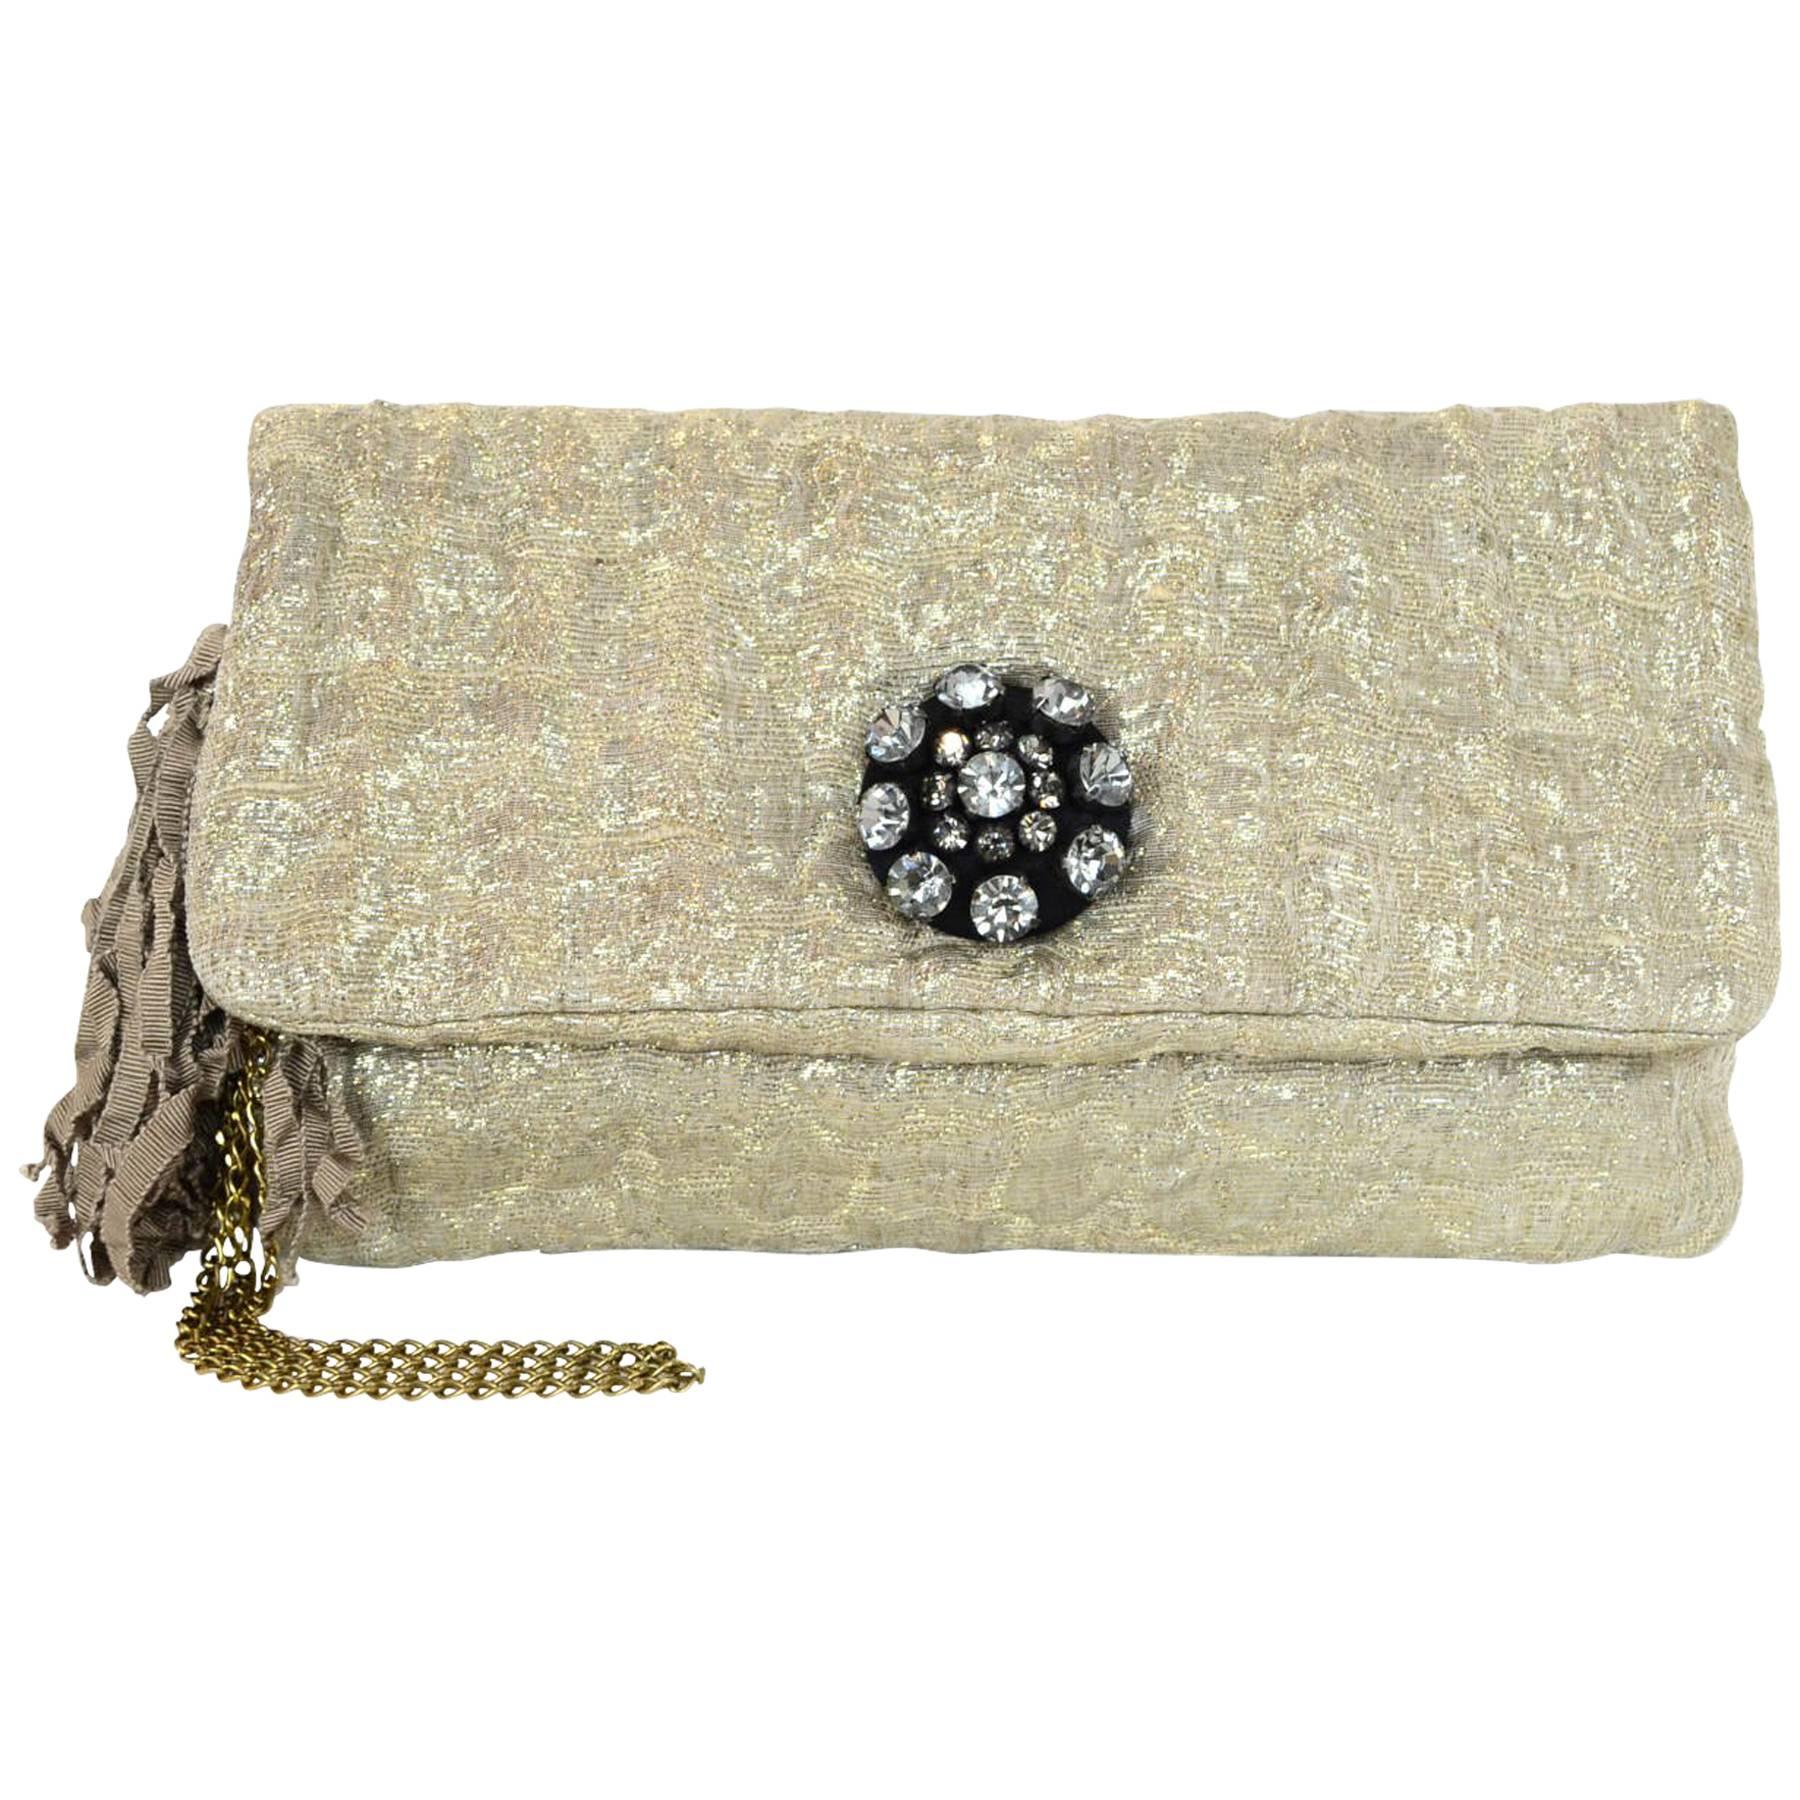 Lanvin Gold Lurex Sac Oulouette Clutch/Wristlet Bag with Dust Bag